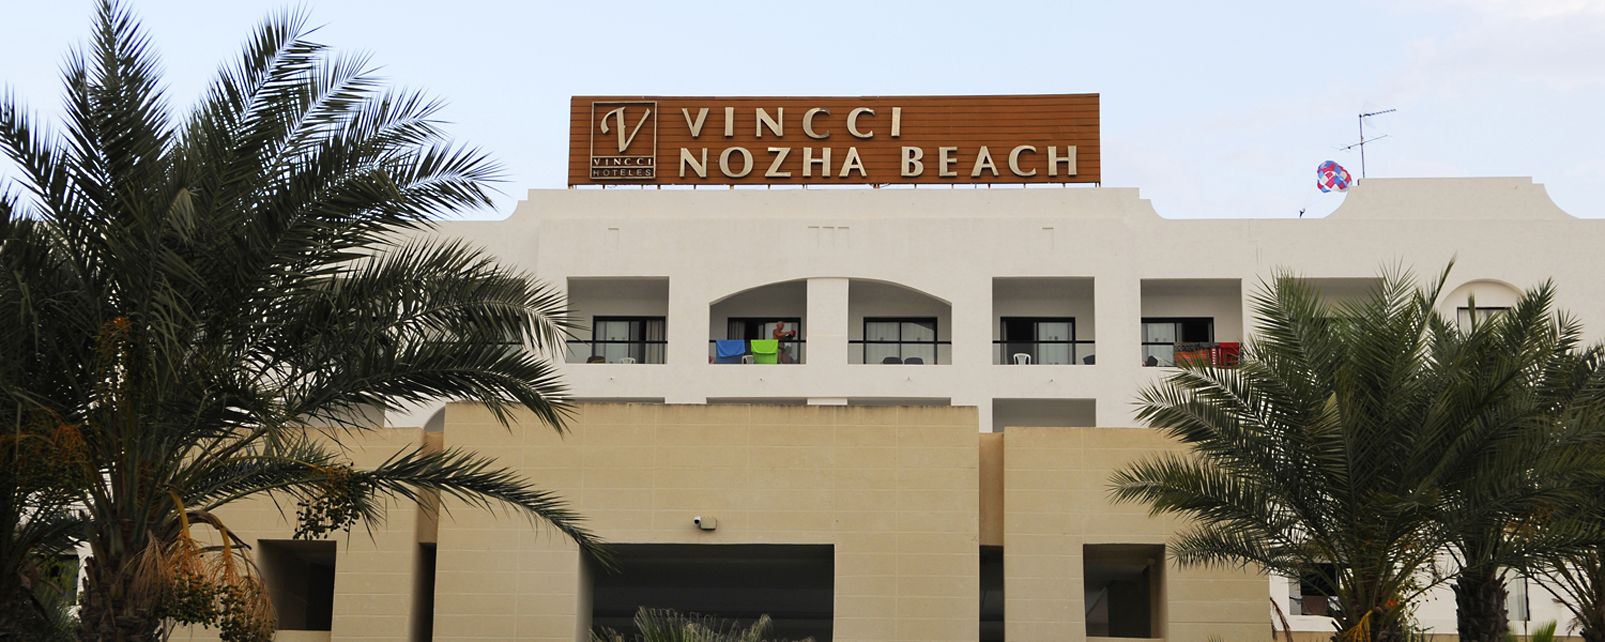 Hôtel Vincci Nozha Beach